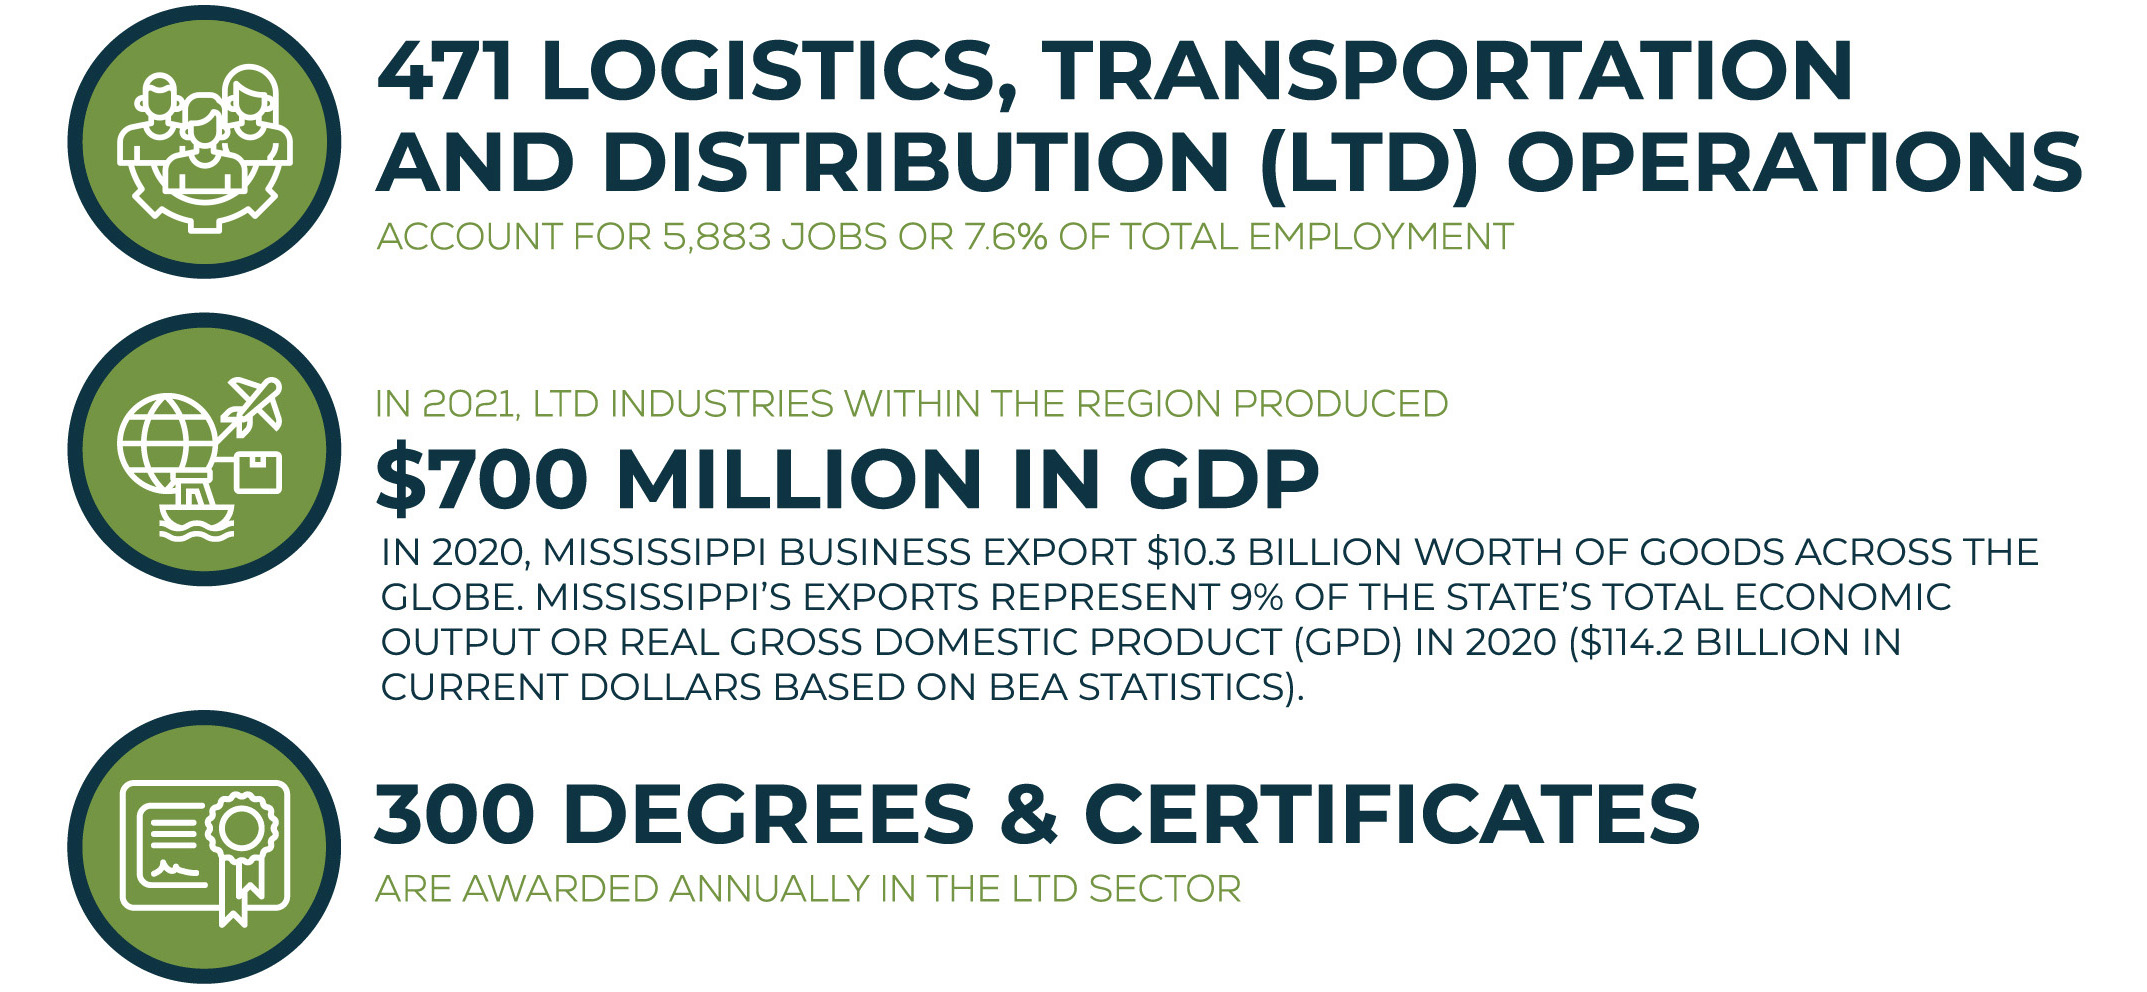 Logistics/Transportation/Distribution Infographic